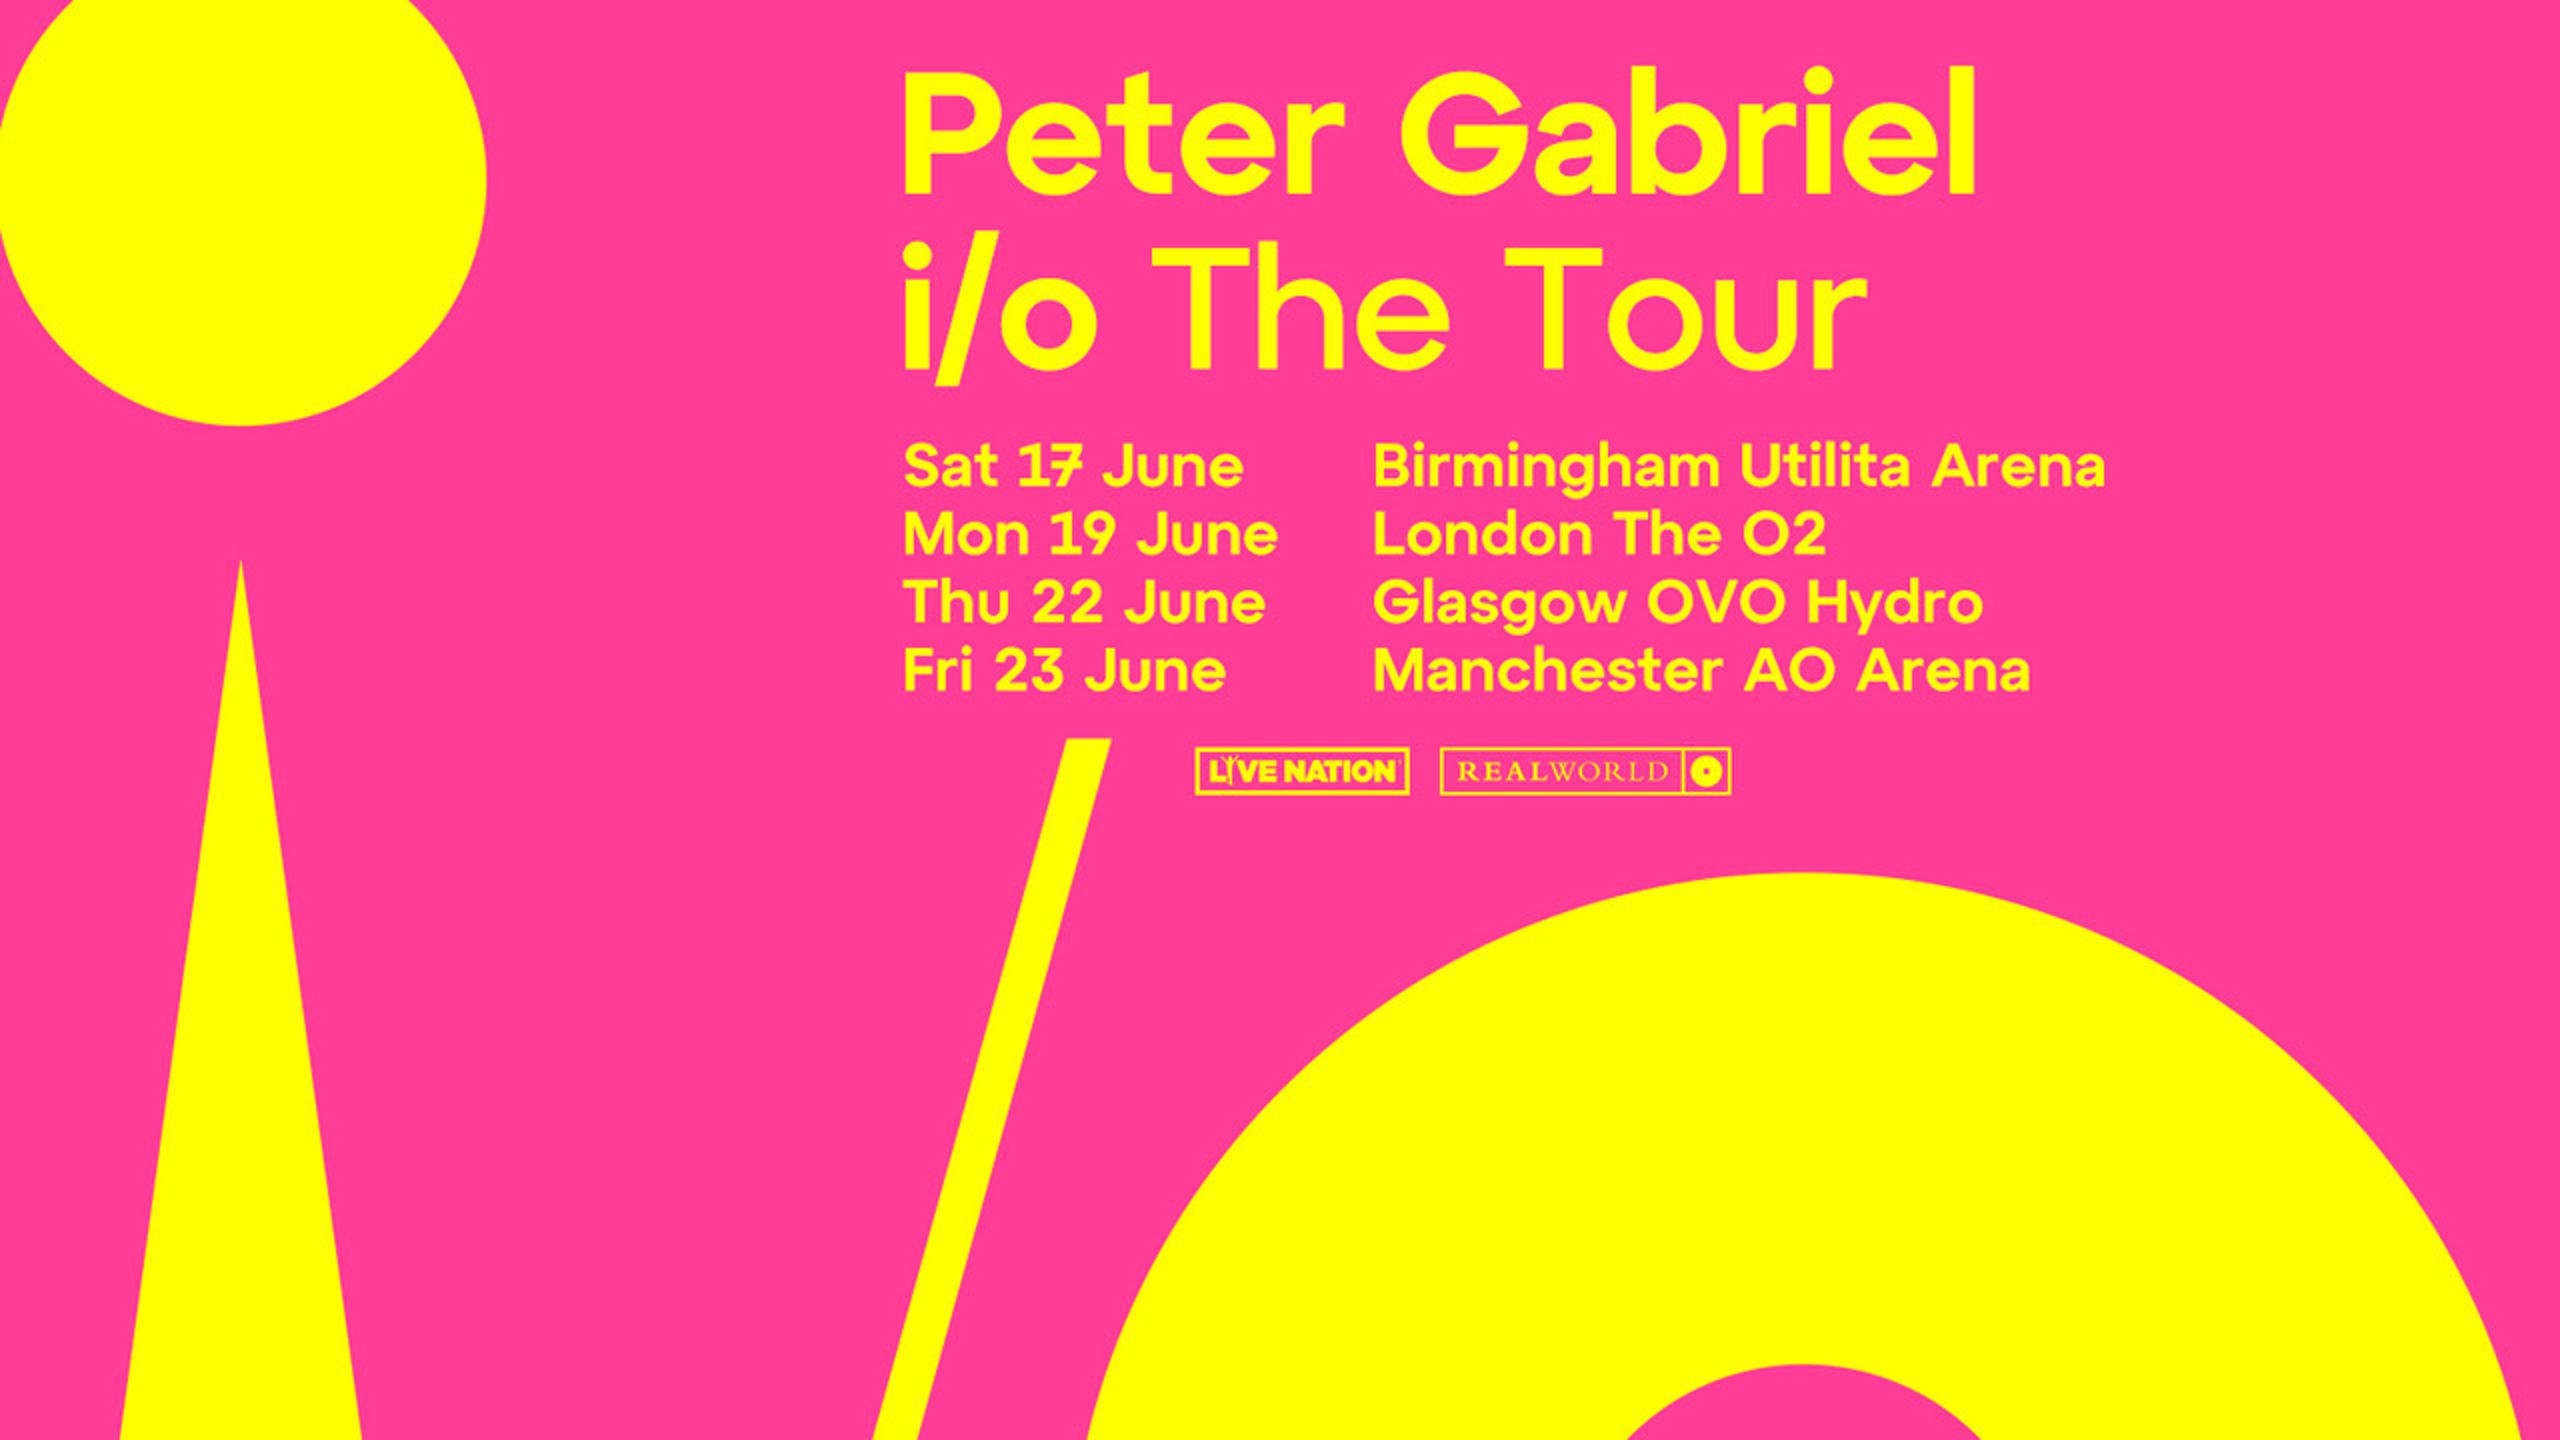 Peter Gabriel concert tickets for Manchester AO Arena, Manchester